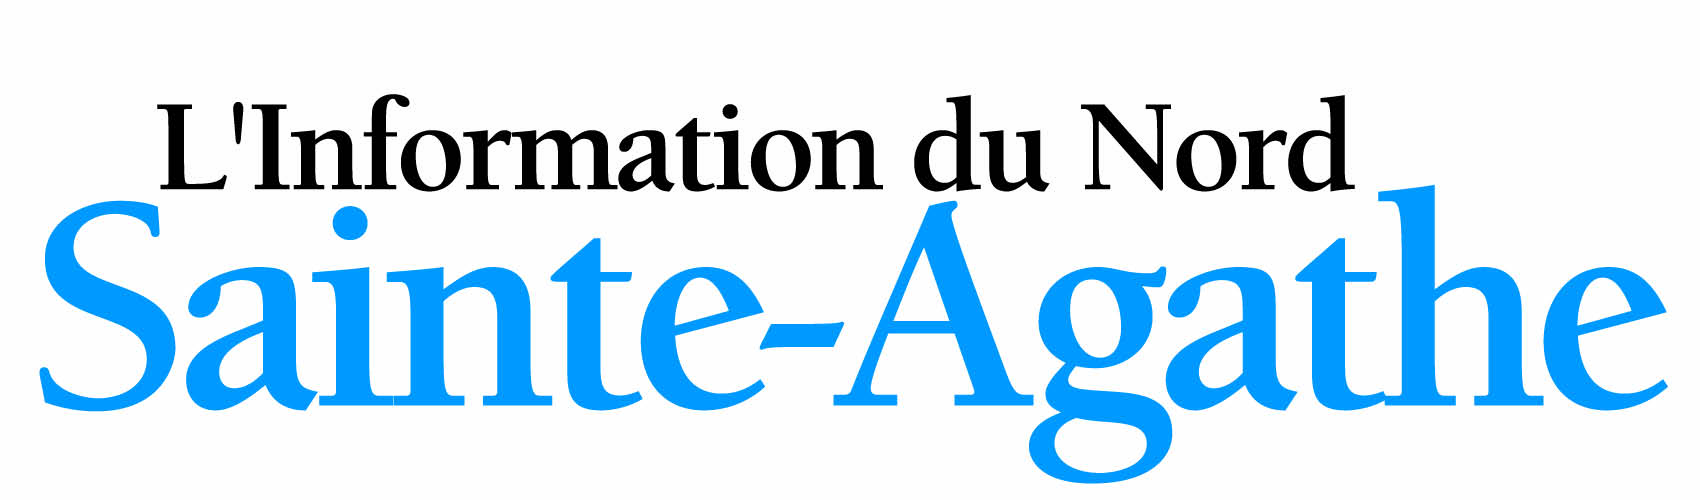 Ste-Agathe L'information du Nord IA_Logo_cmyk